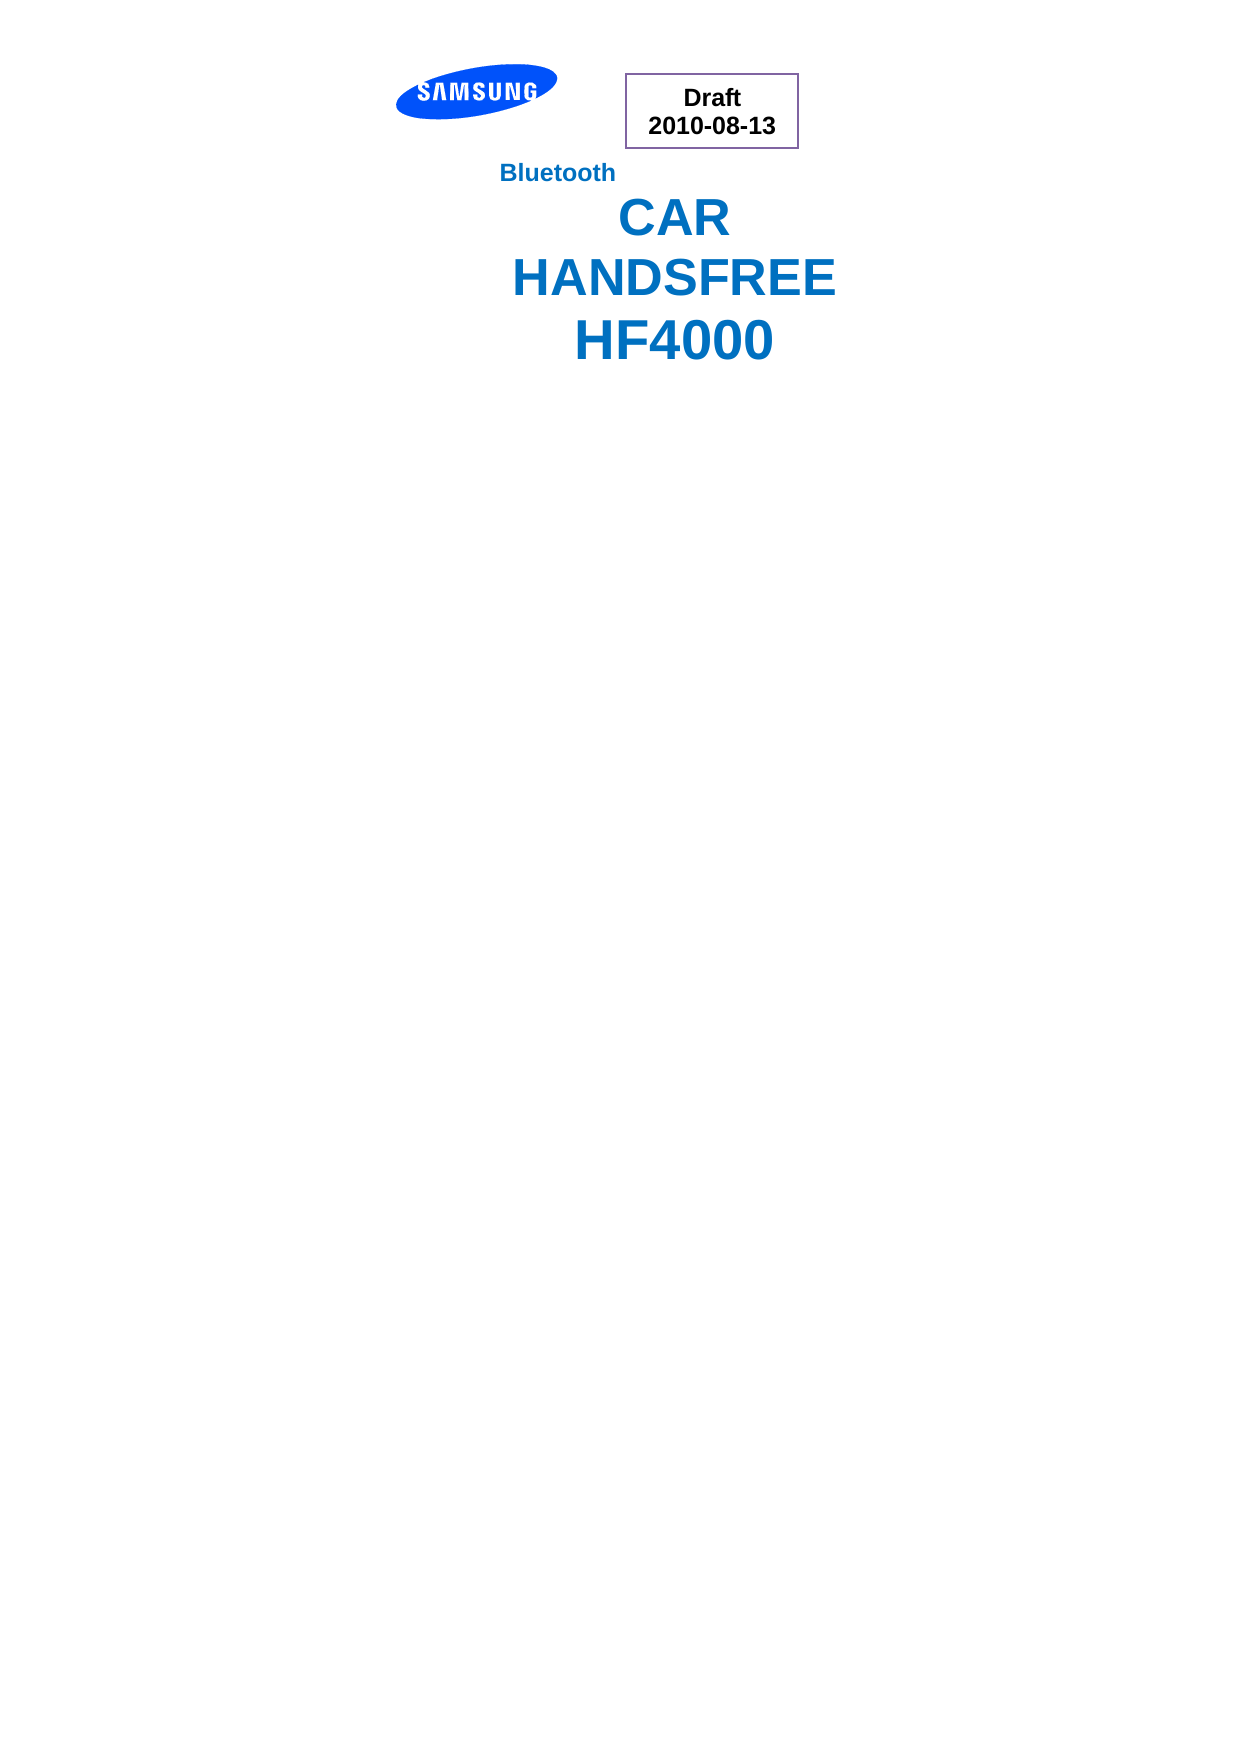    Bluetooth CAR HANDSFREE HF4000 Draft  2010-08-13